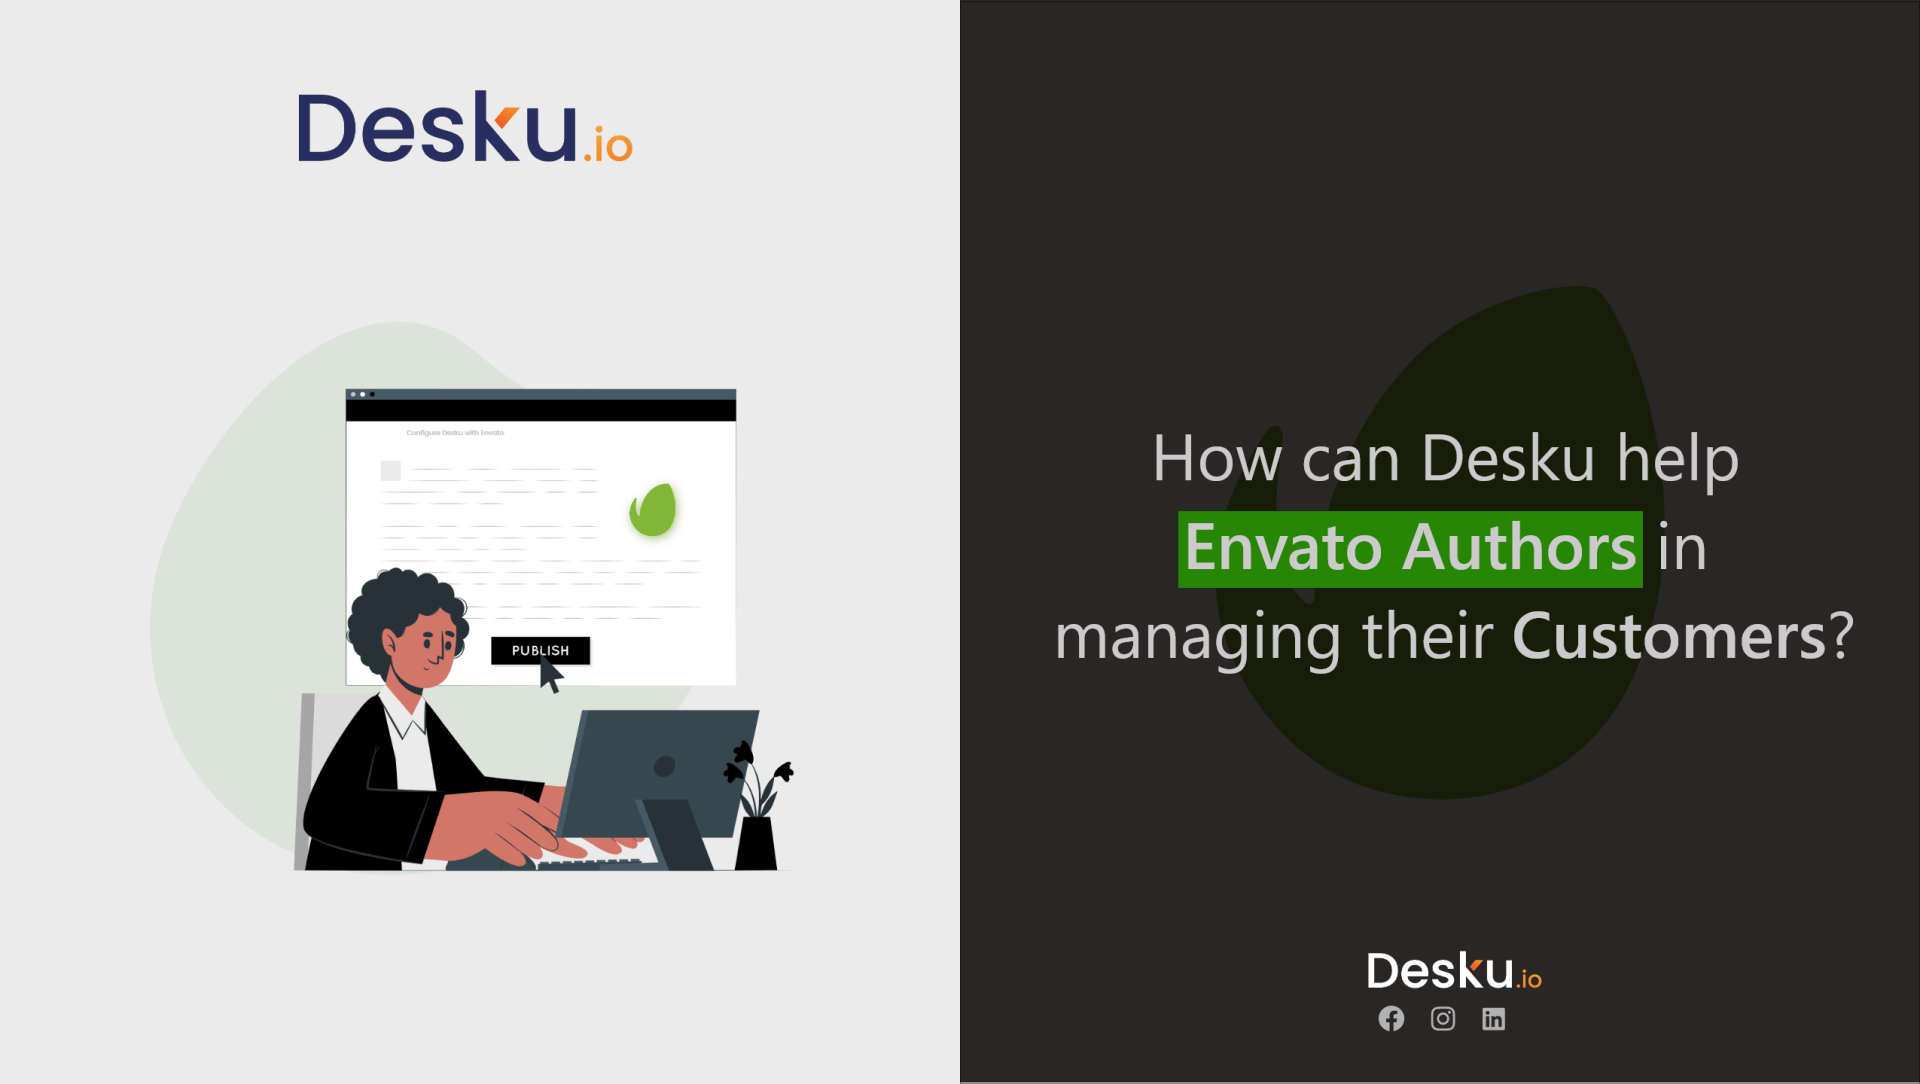 How can Desku help Envato Authors?